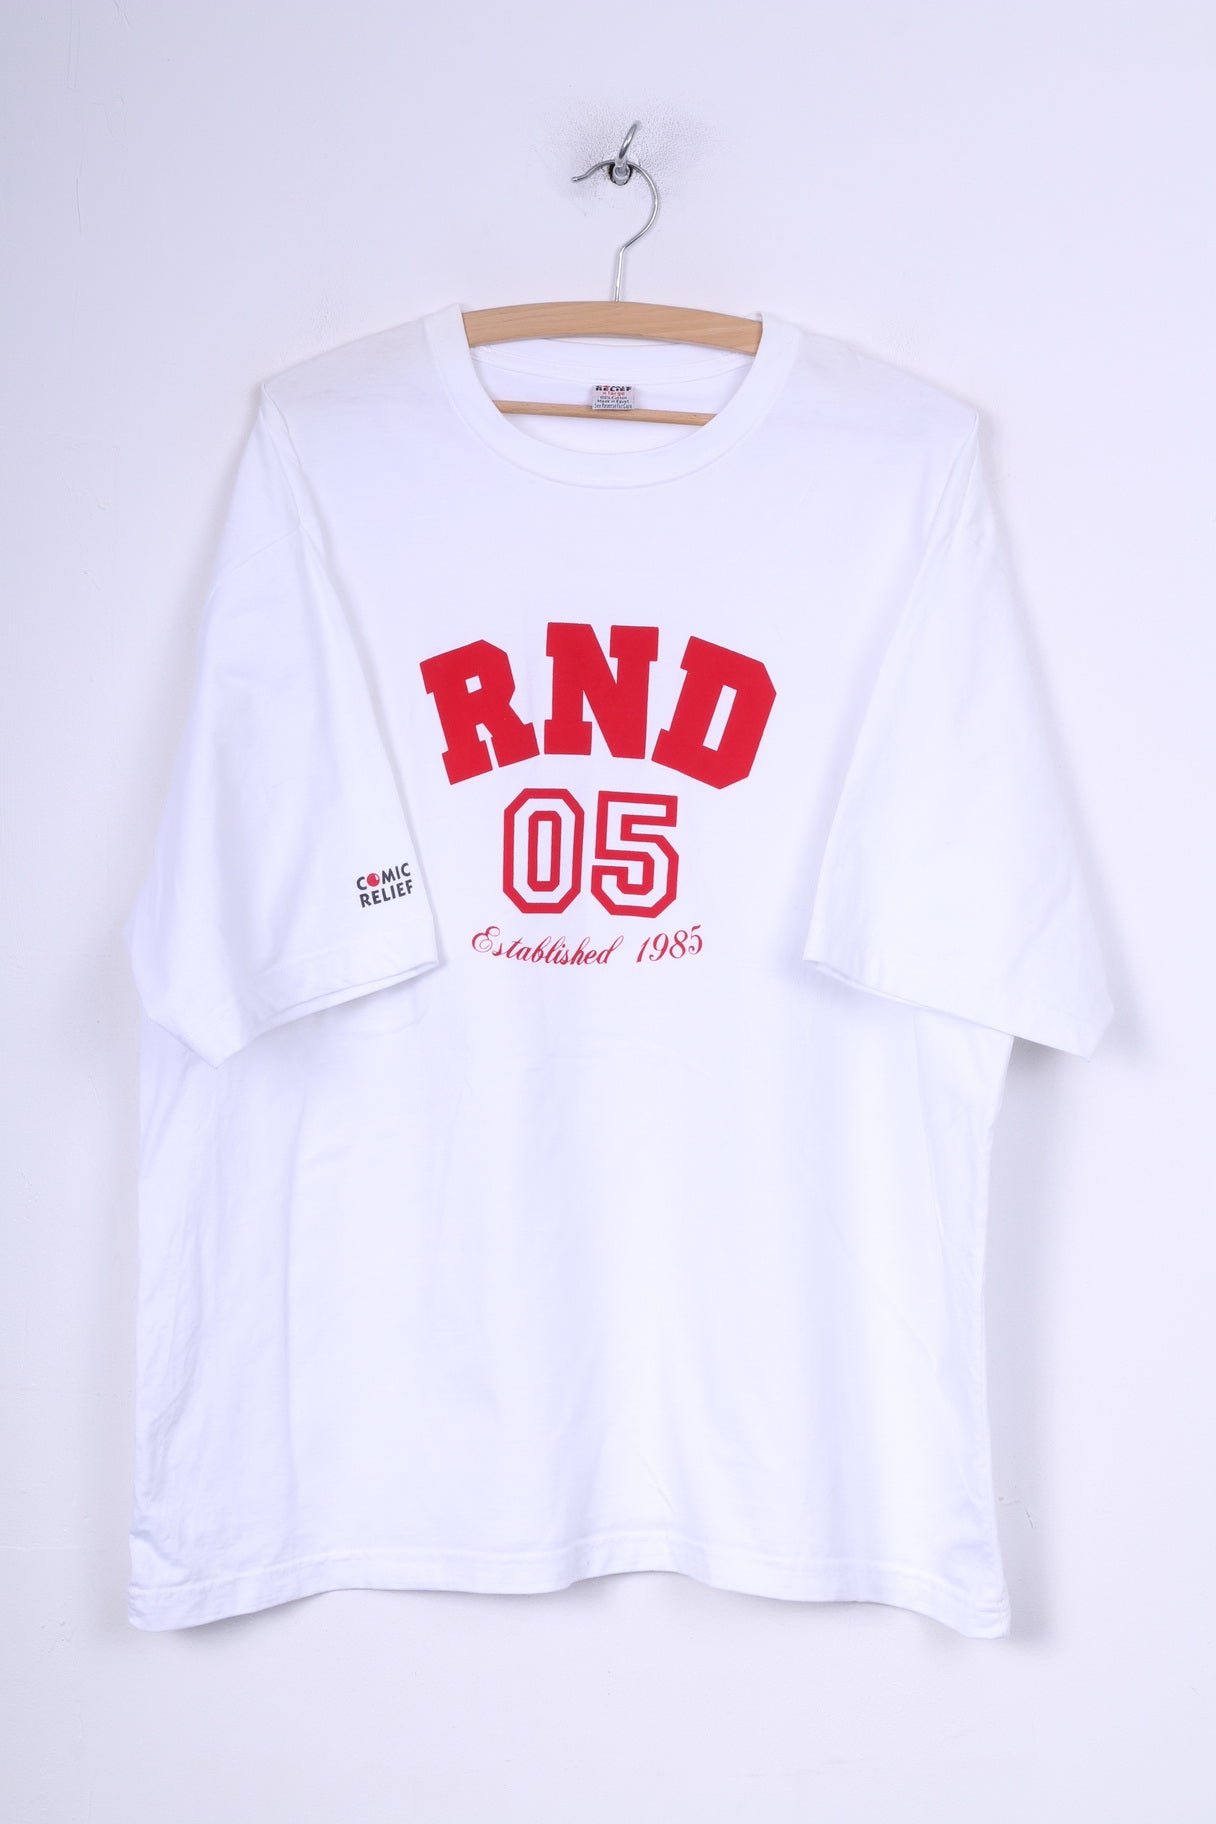 Comic Relief RND 05 Mens XL T-Shirt Graphic White Cotton Established 1985 Summer